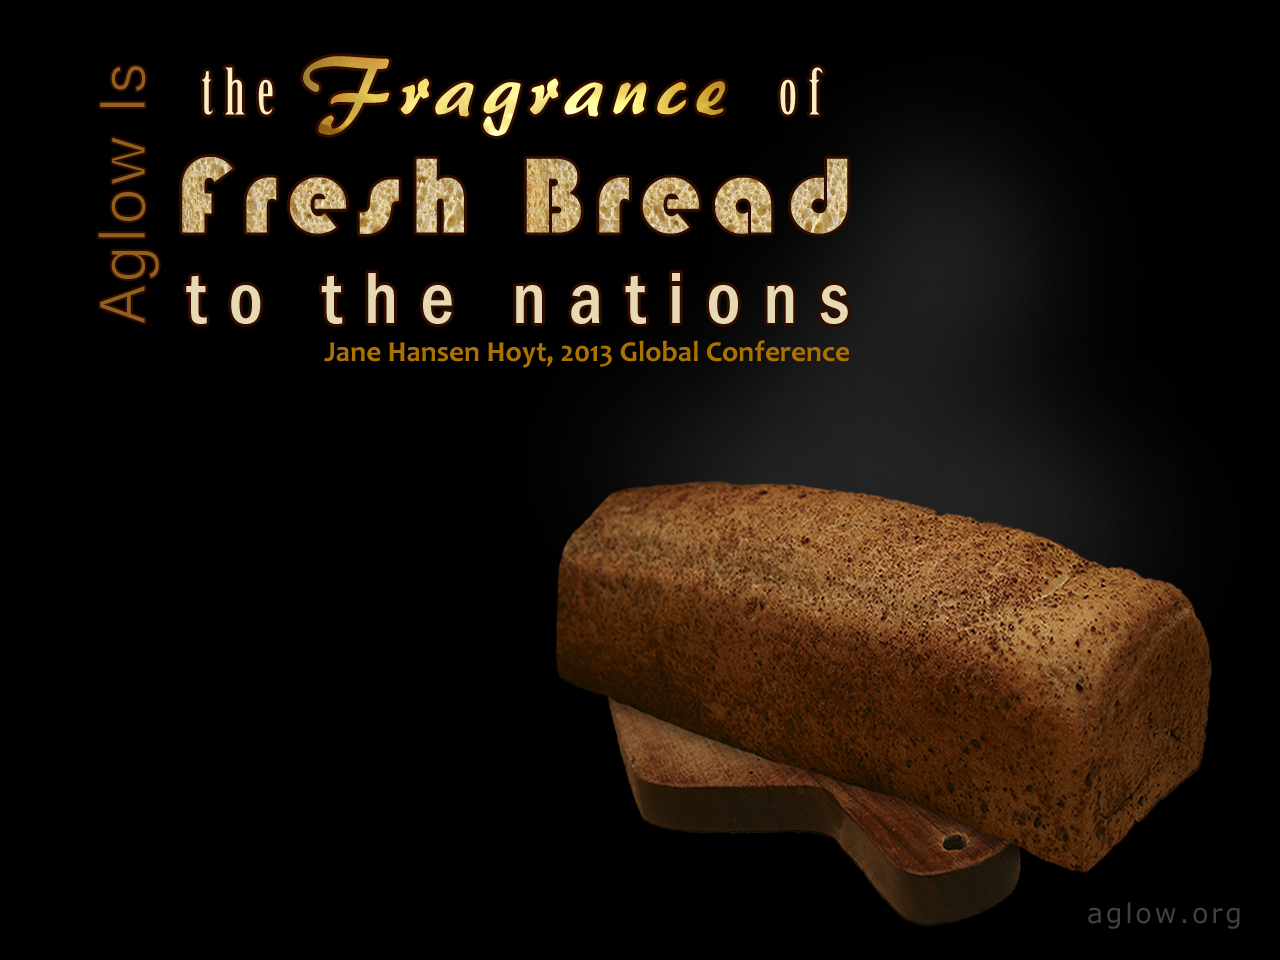 fresh-bread-blackbg-1280x960